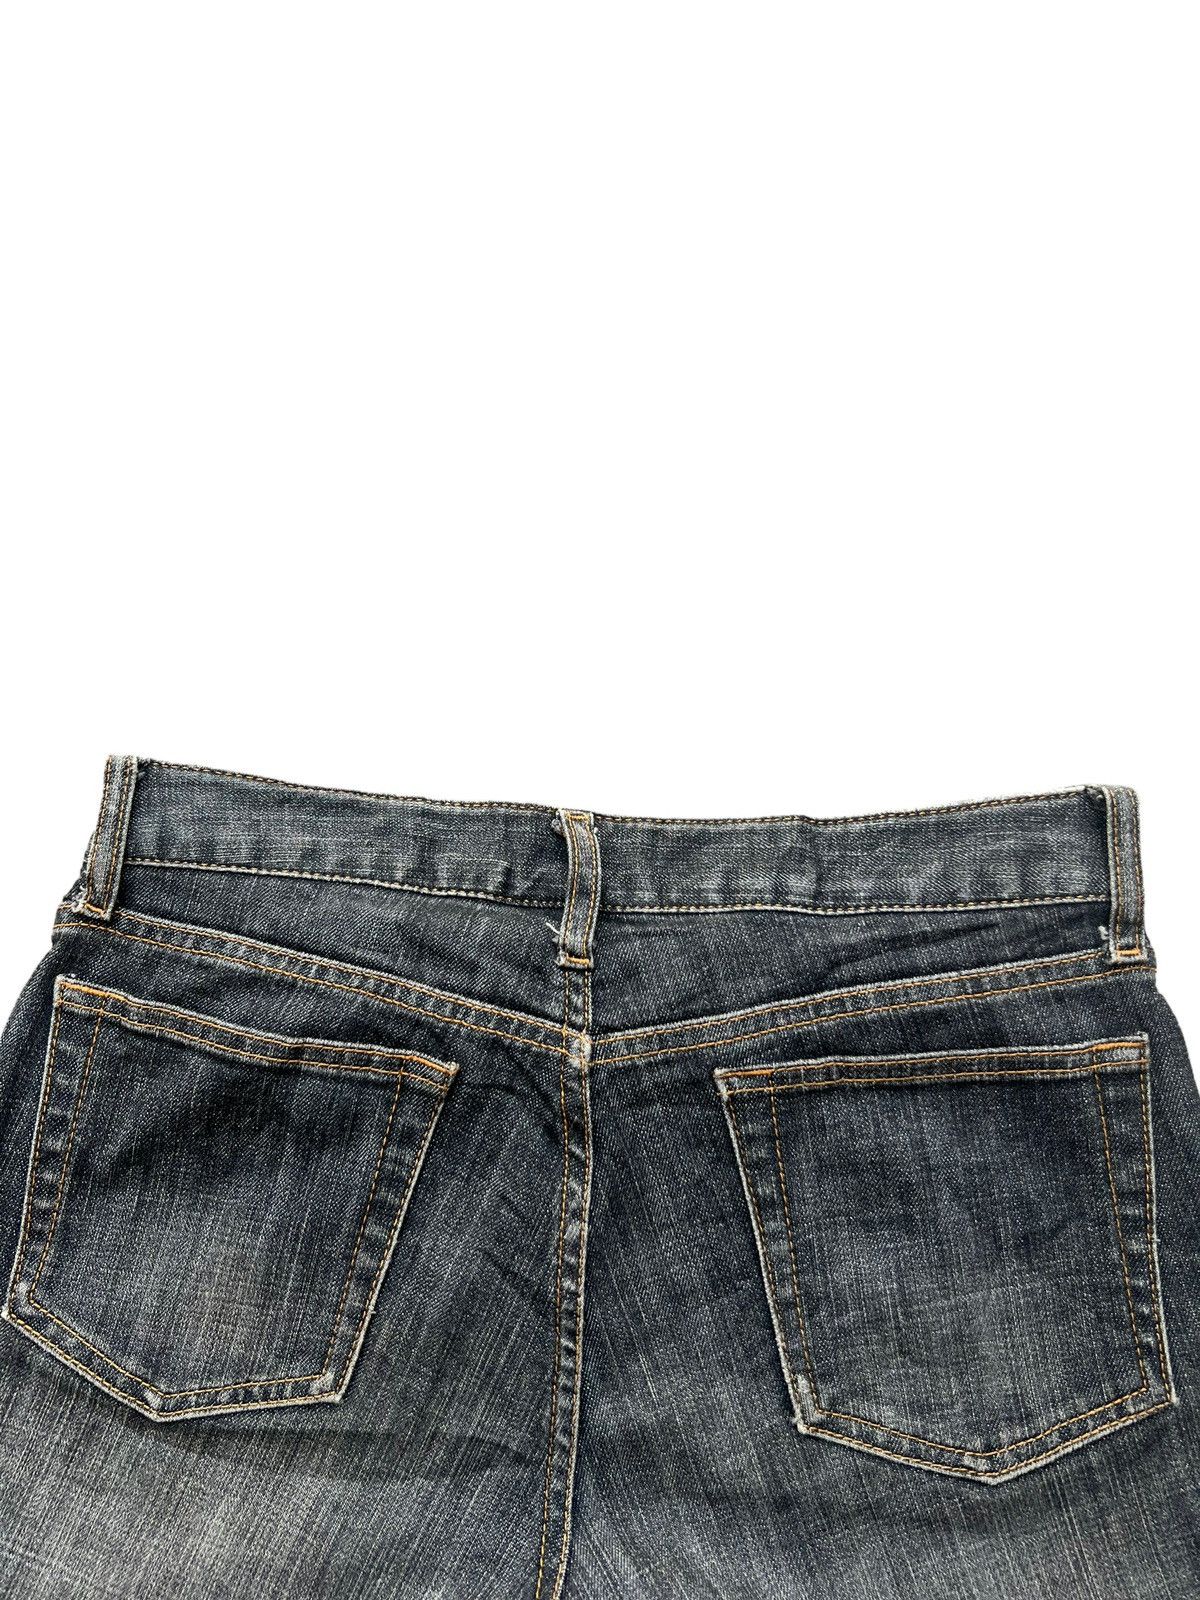 Uniqlo Black Low Rise Bootcut Flare Denim Jeans 30x29 - 7